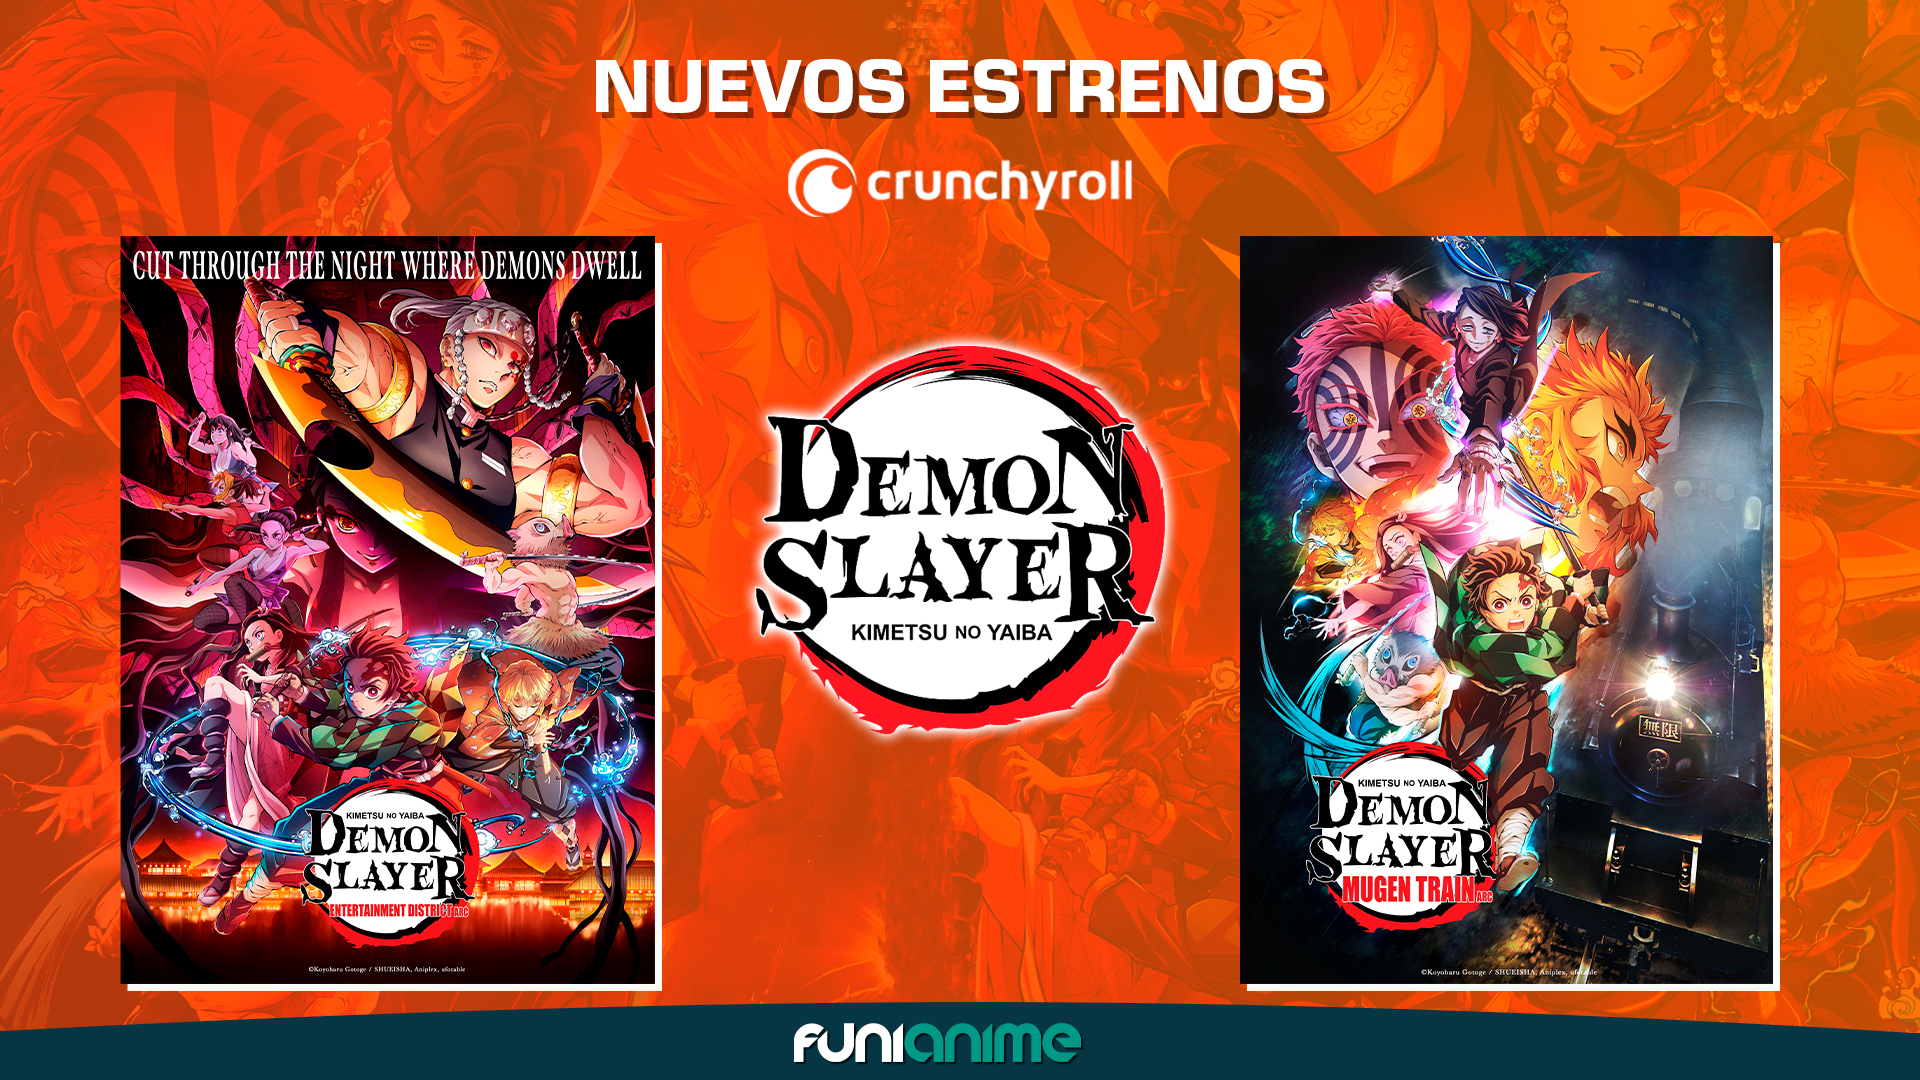 Demon Slayer Temporada 2 online vía Crunchyroll: fecha de estreno